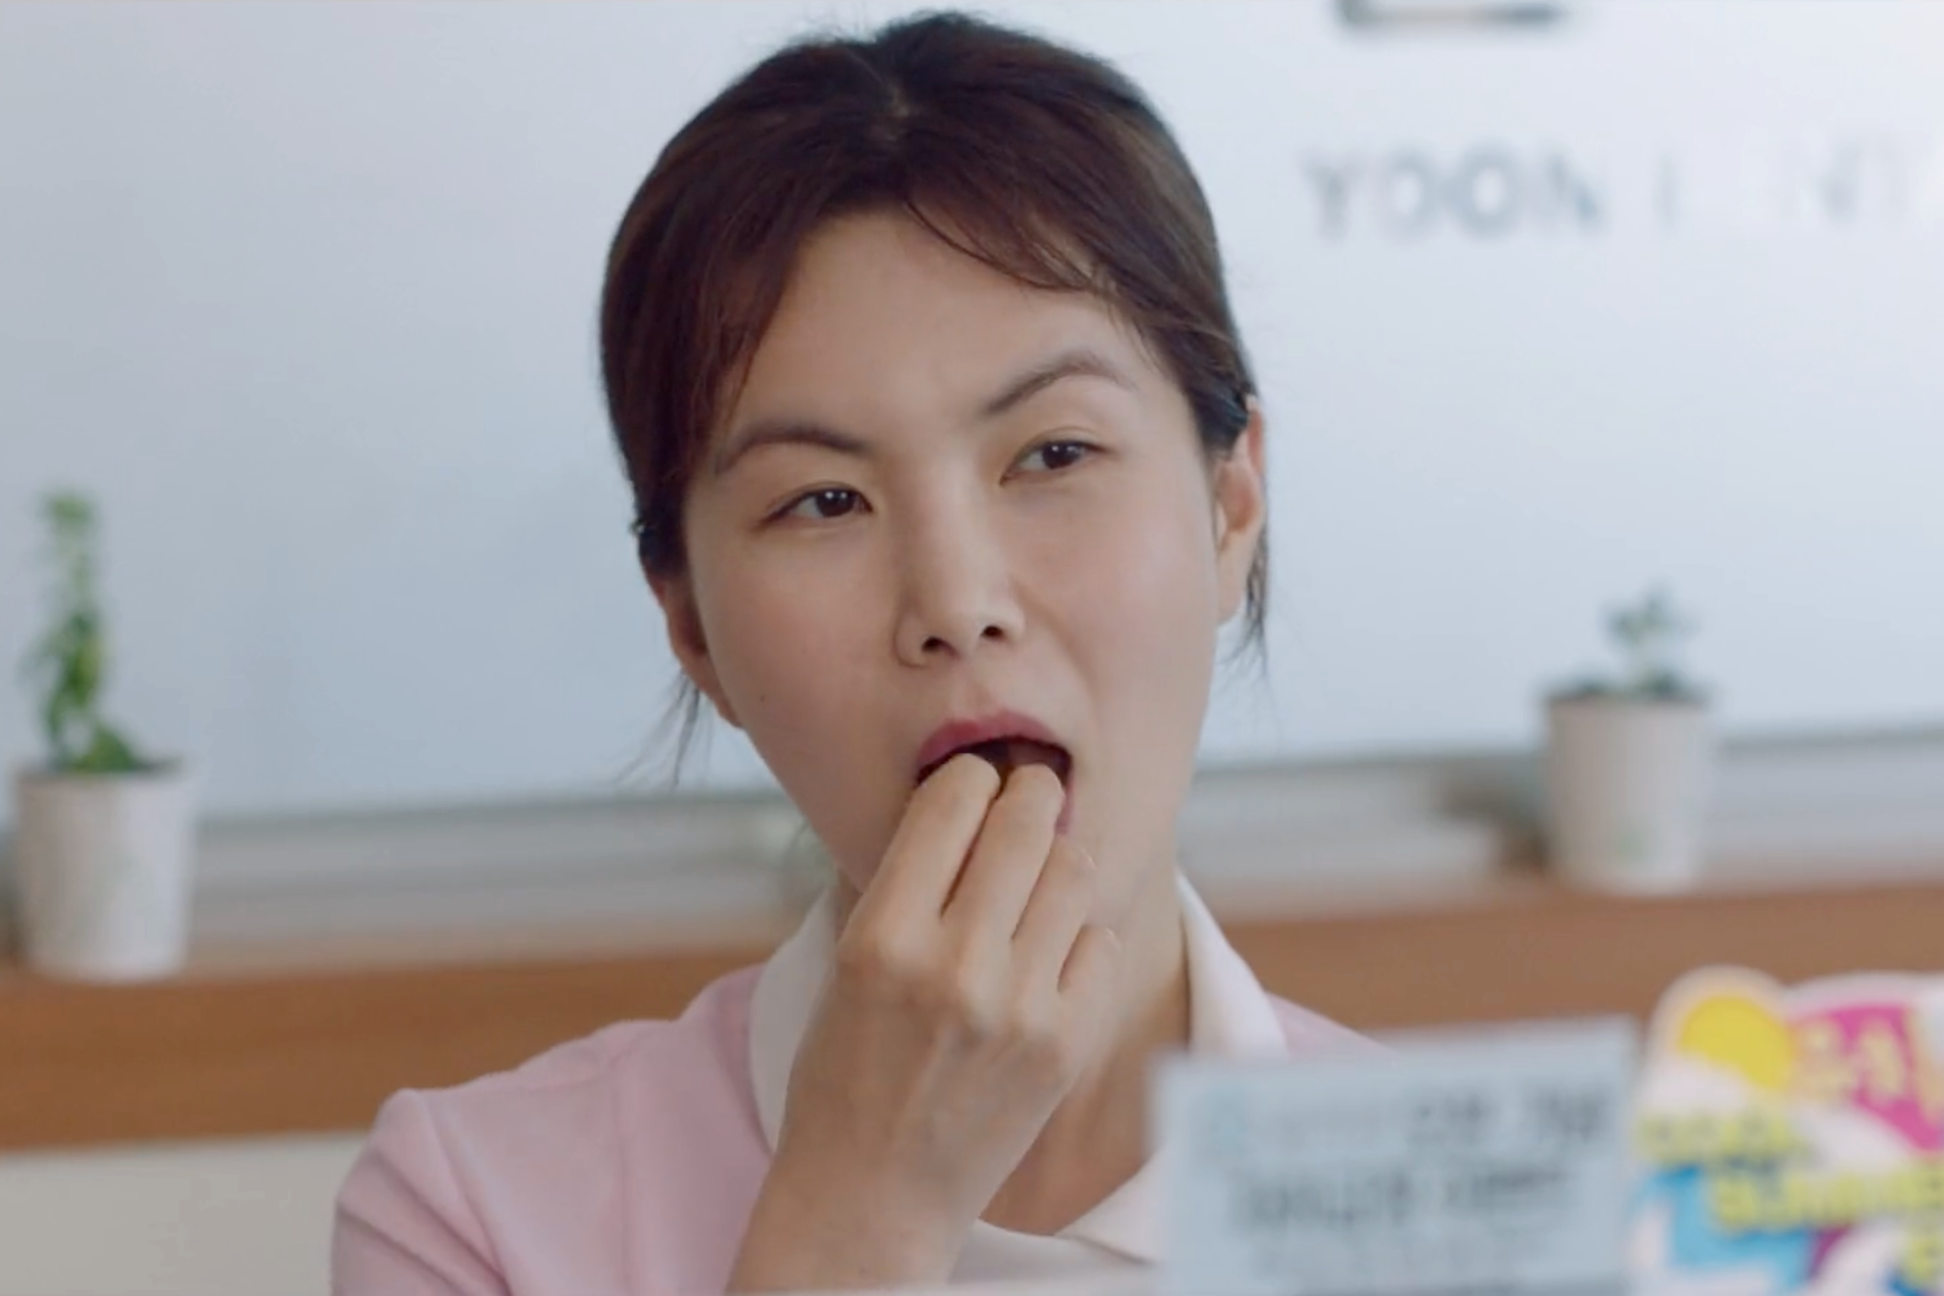 Gong Min-jeung eating Kopiko in the k-drama, Hometown Cha-Cha-Cha